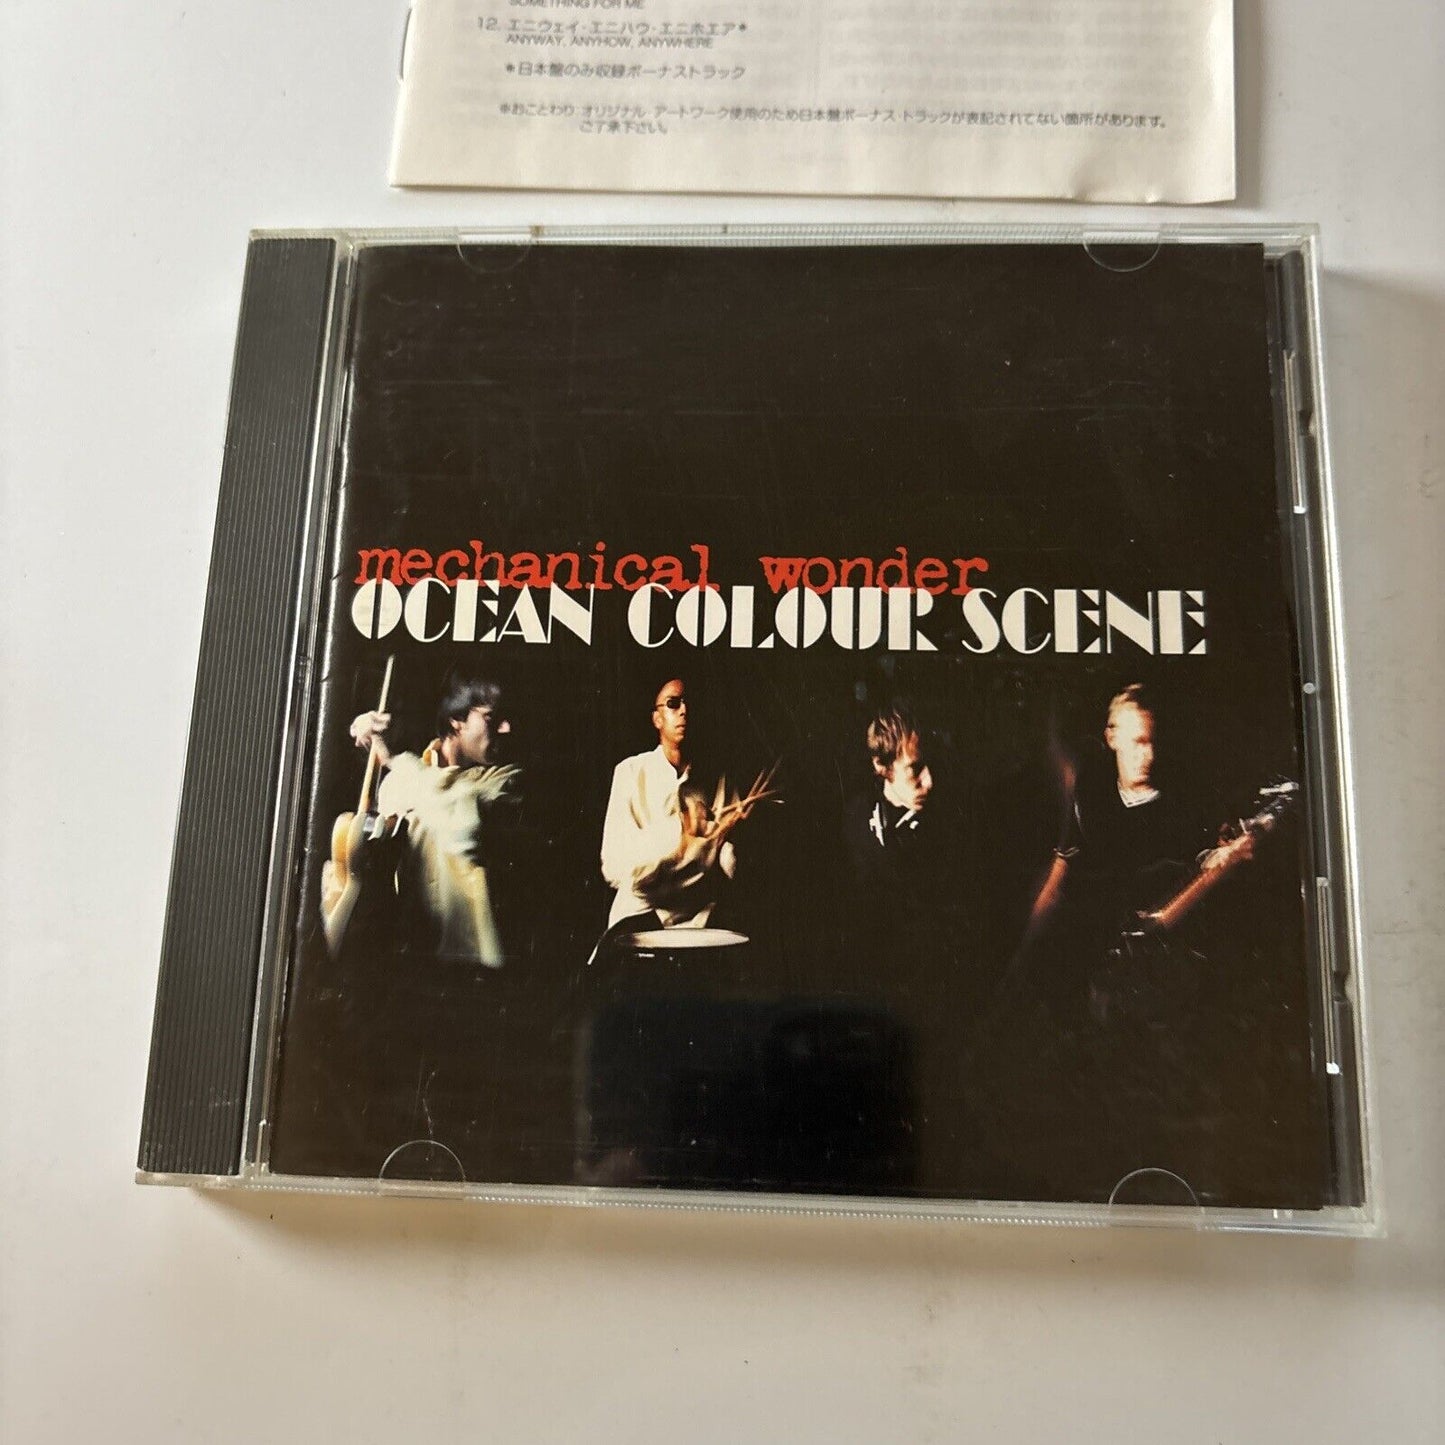 Ocean Colour Scene - Mechanical Wonder (CD, 2001) Japan Uici-2002